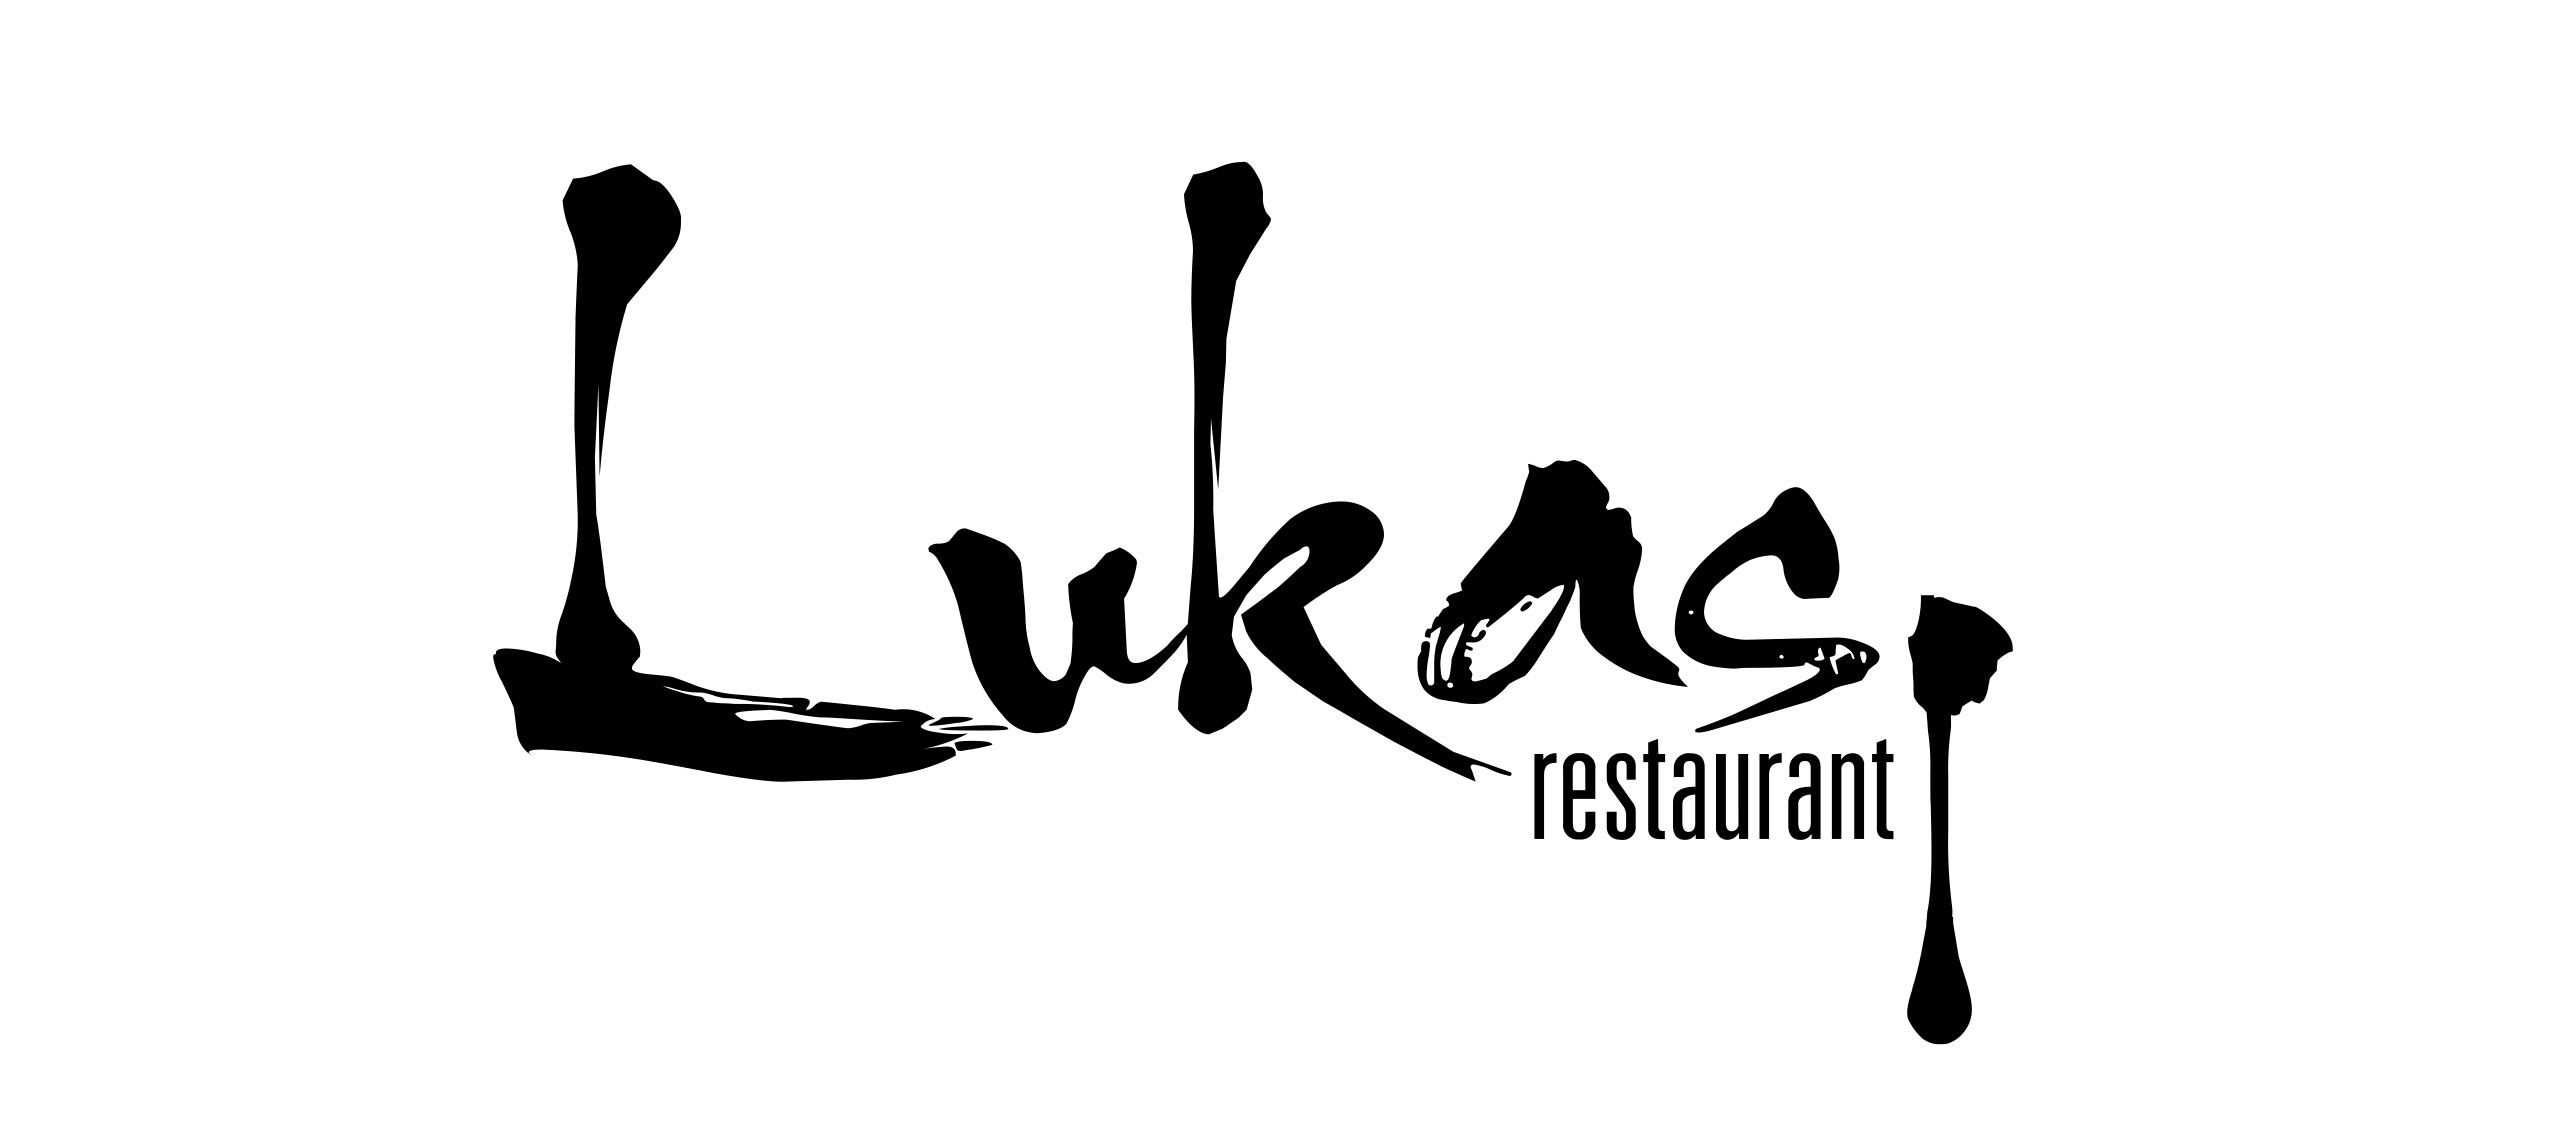 assets/images/f/lukas_restaurant_logo-c9328e82.jpg